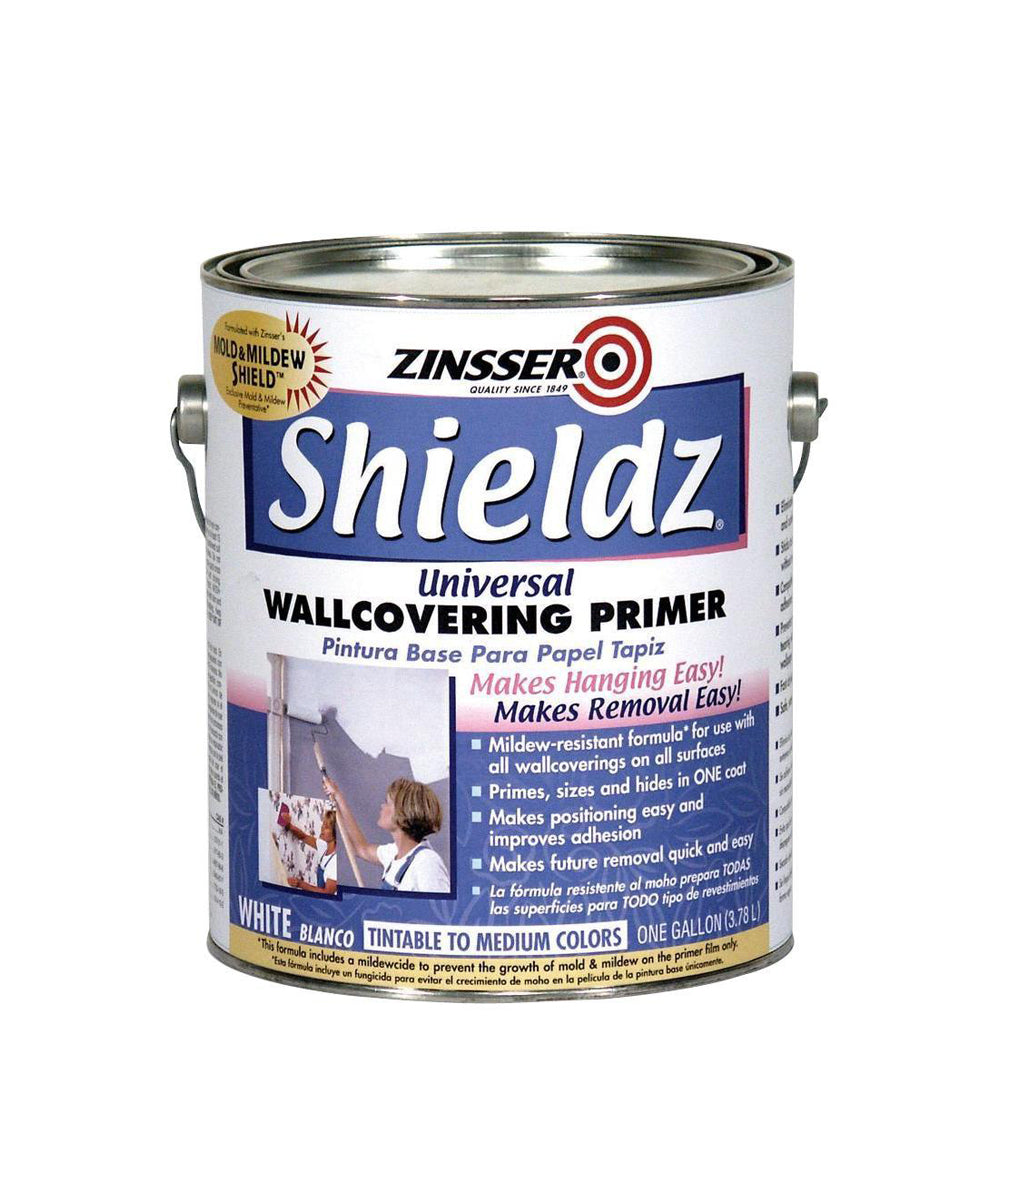 Wallcovering Primer Shieldz, available at Wallauer's in NY.